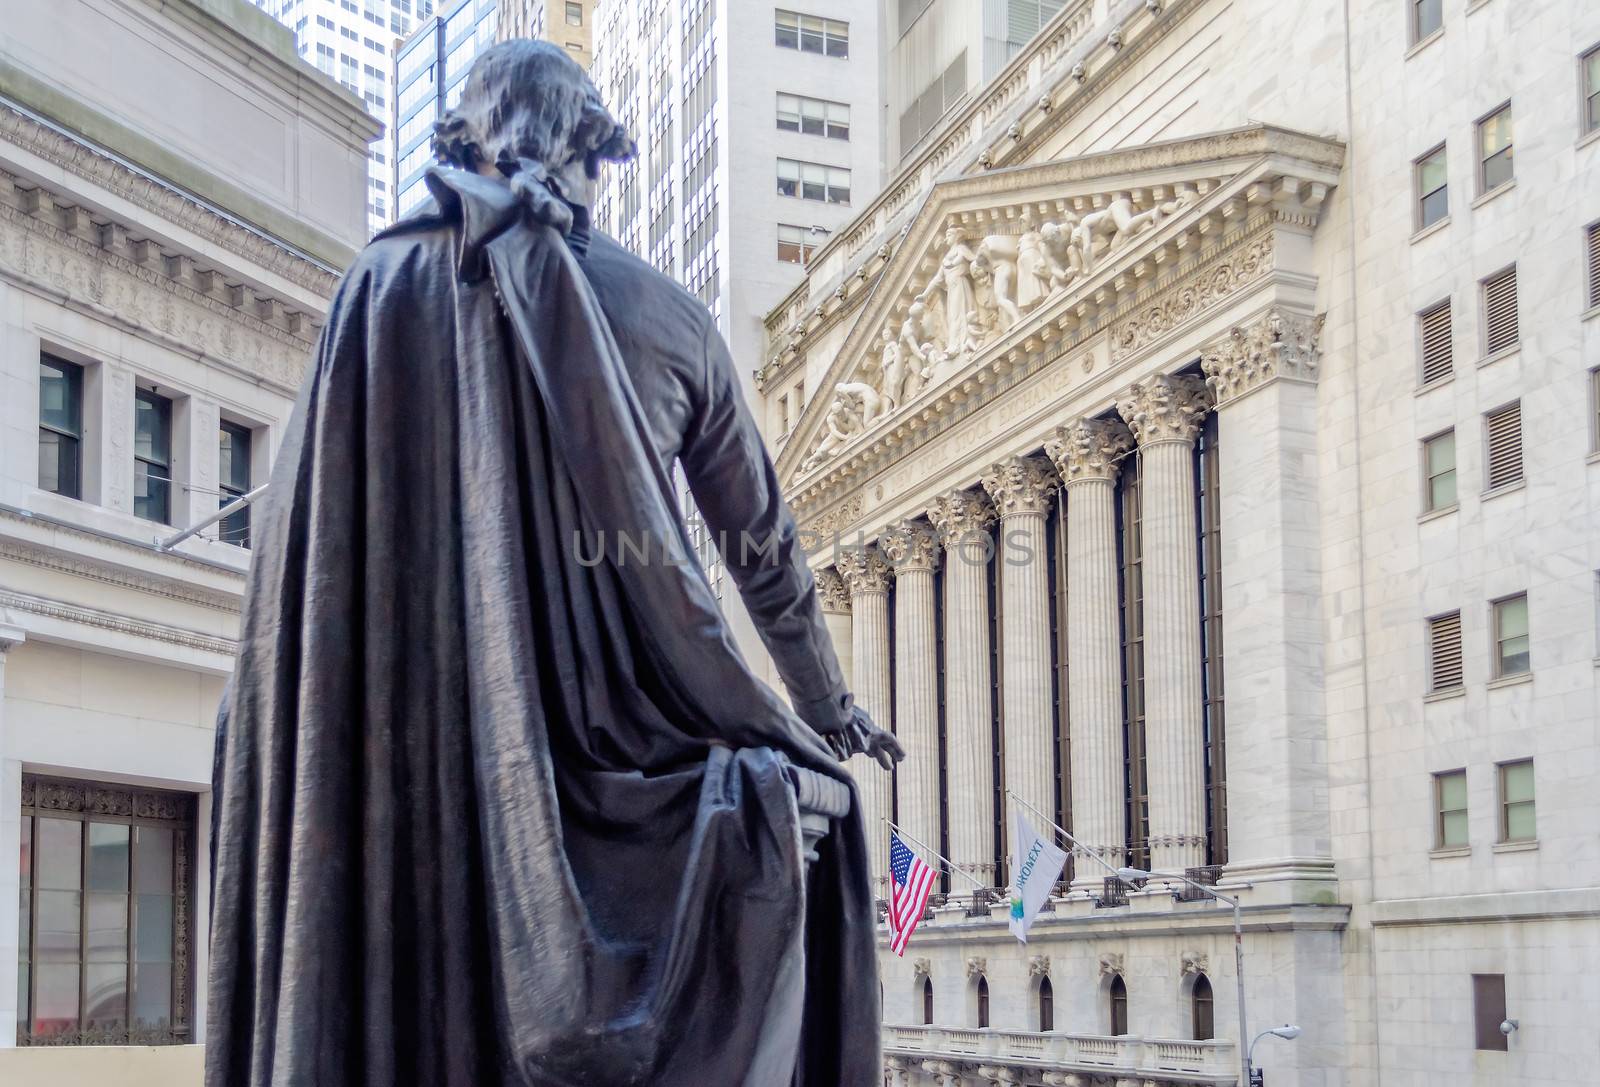 Wall Street, New York by marcorubino